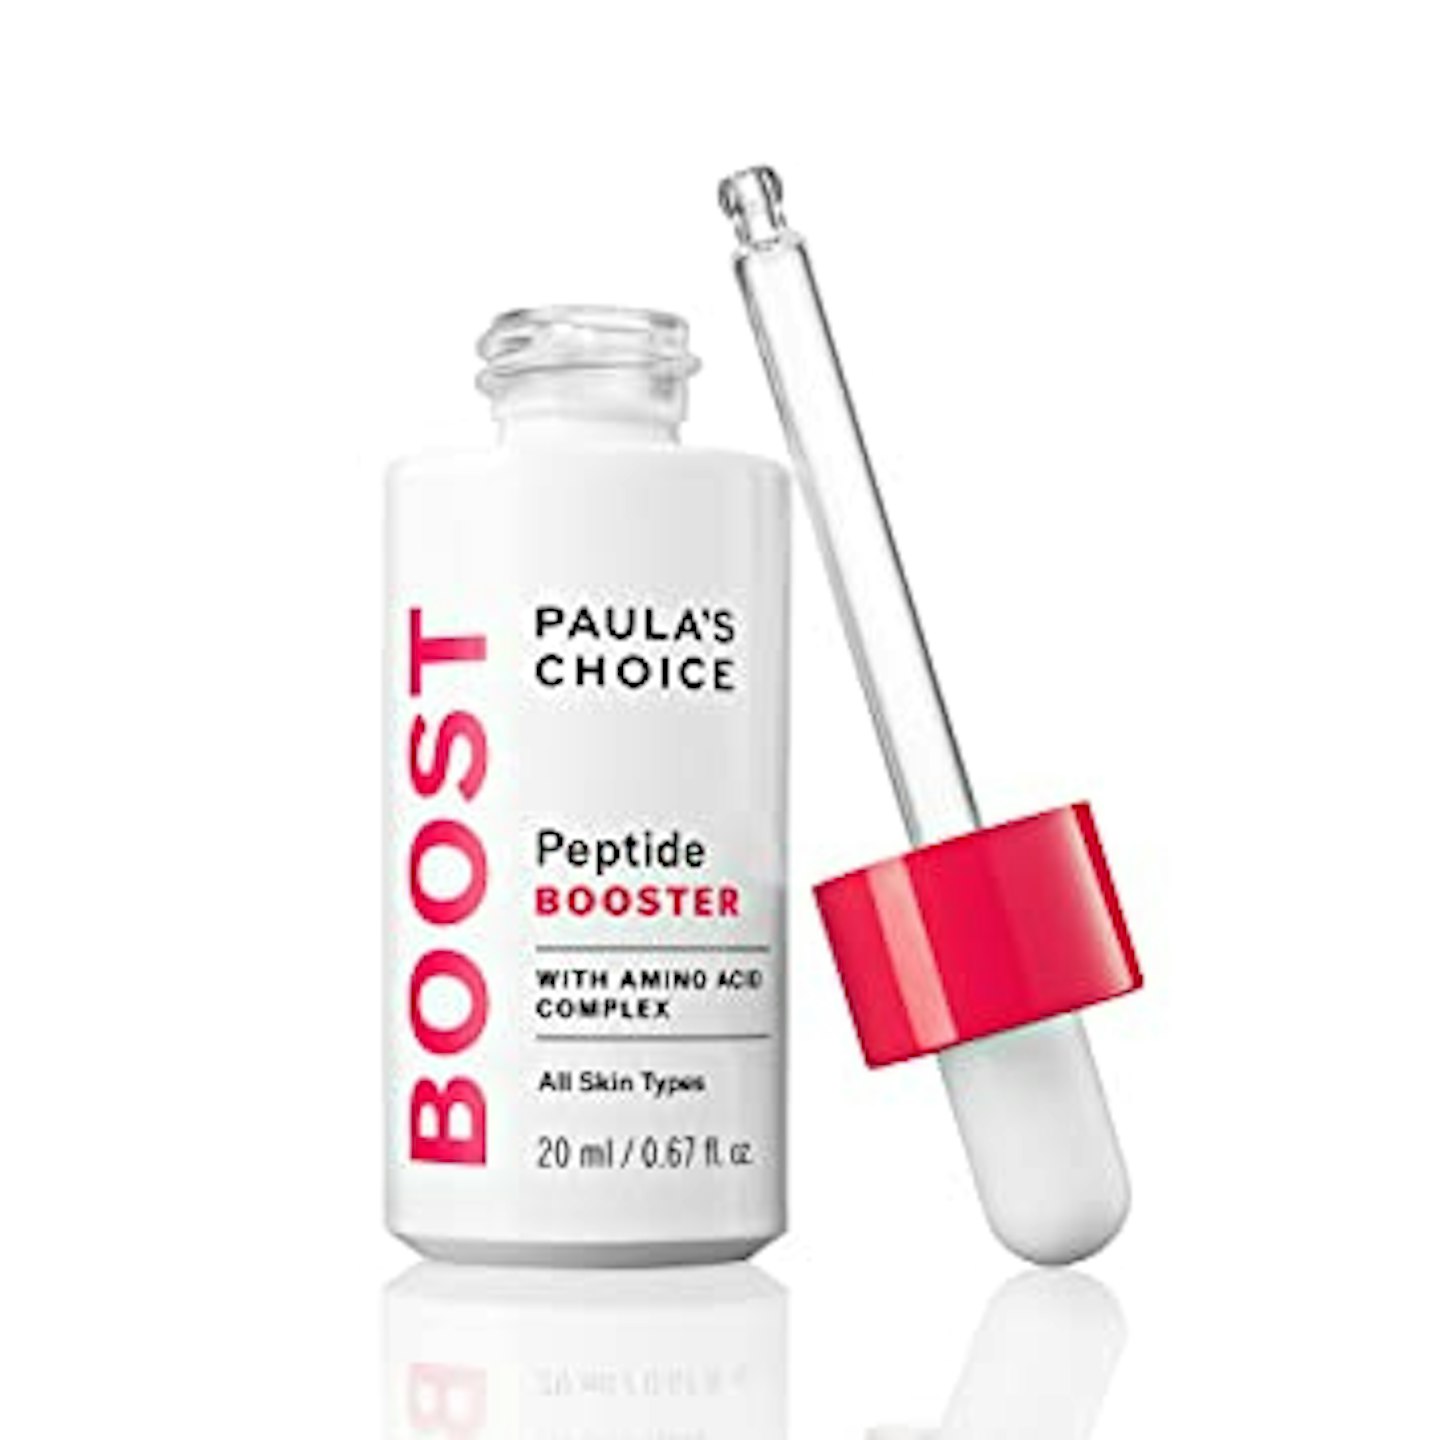 paulas choice peptide booster